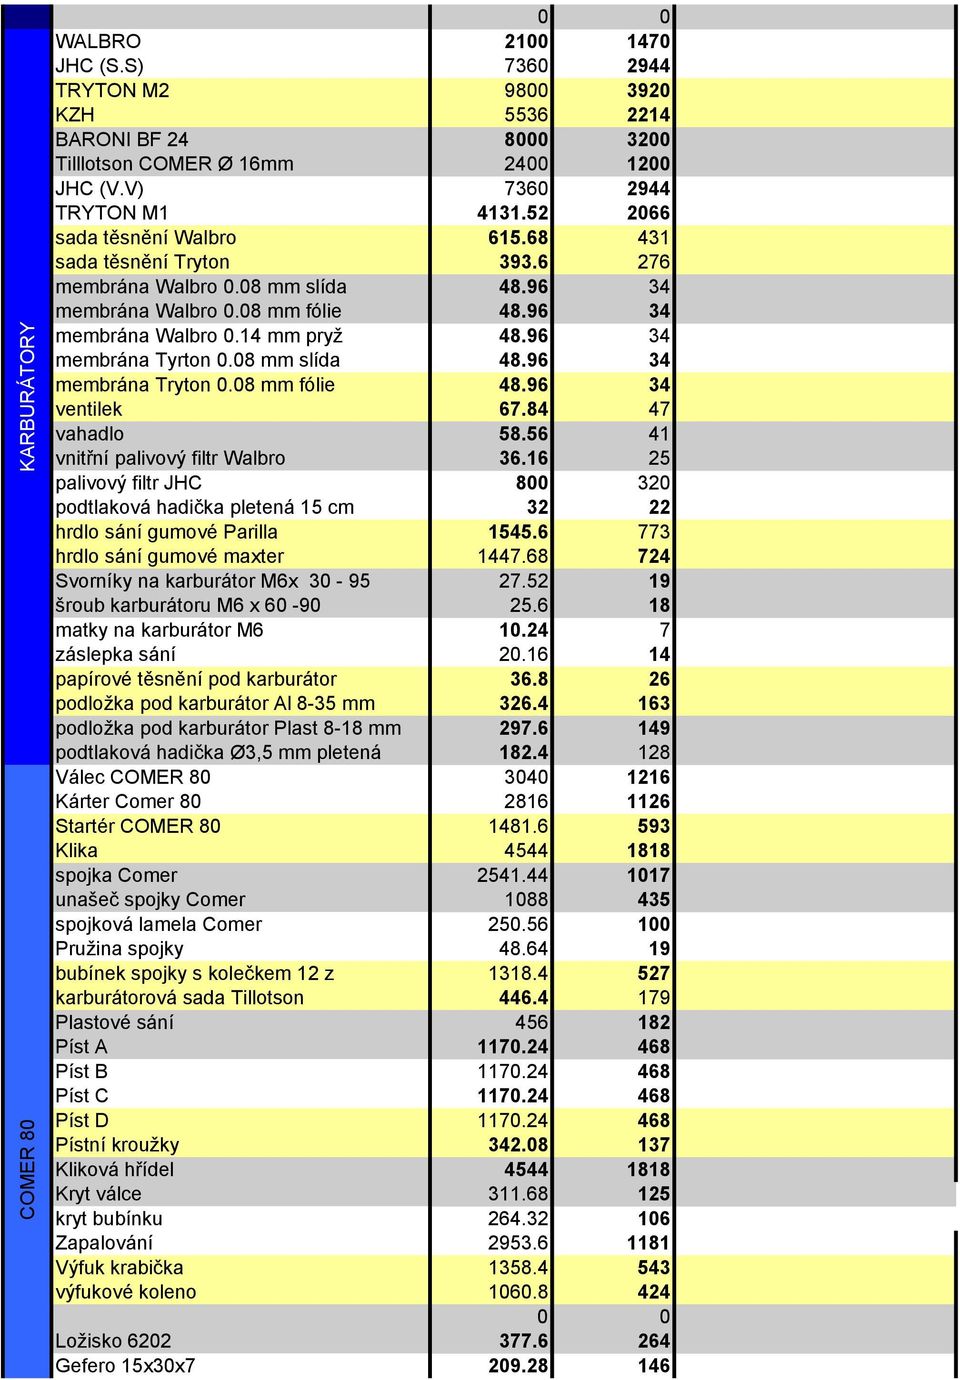 96 34 membrána Tyrton 0.08 mm slída 48.96 34 membrána Tryton 0.08 mm fólie 48.96 34 ventilek 67.84 47 vahadlo 58.56 41 vnitřní palivový filtr Walbro 36.